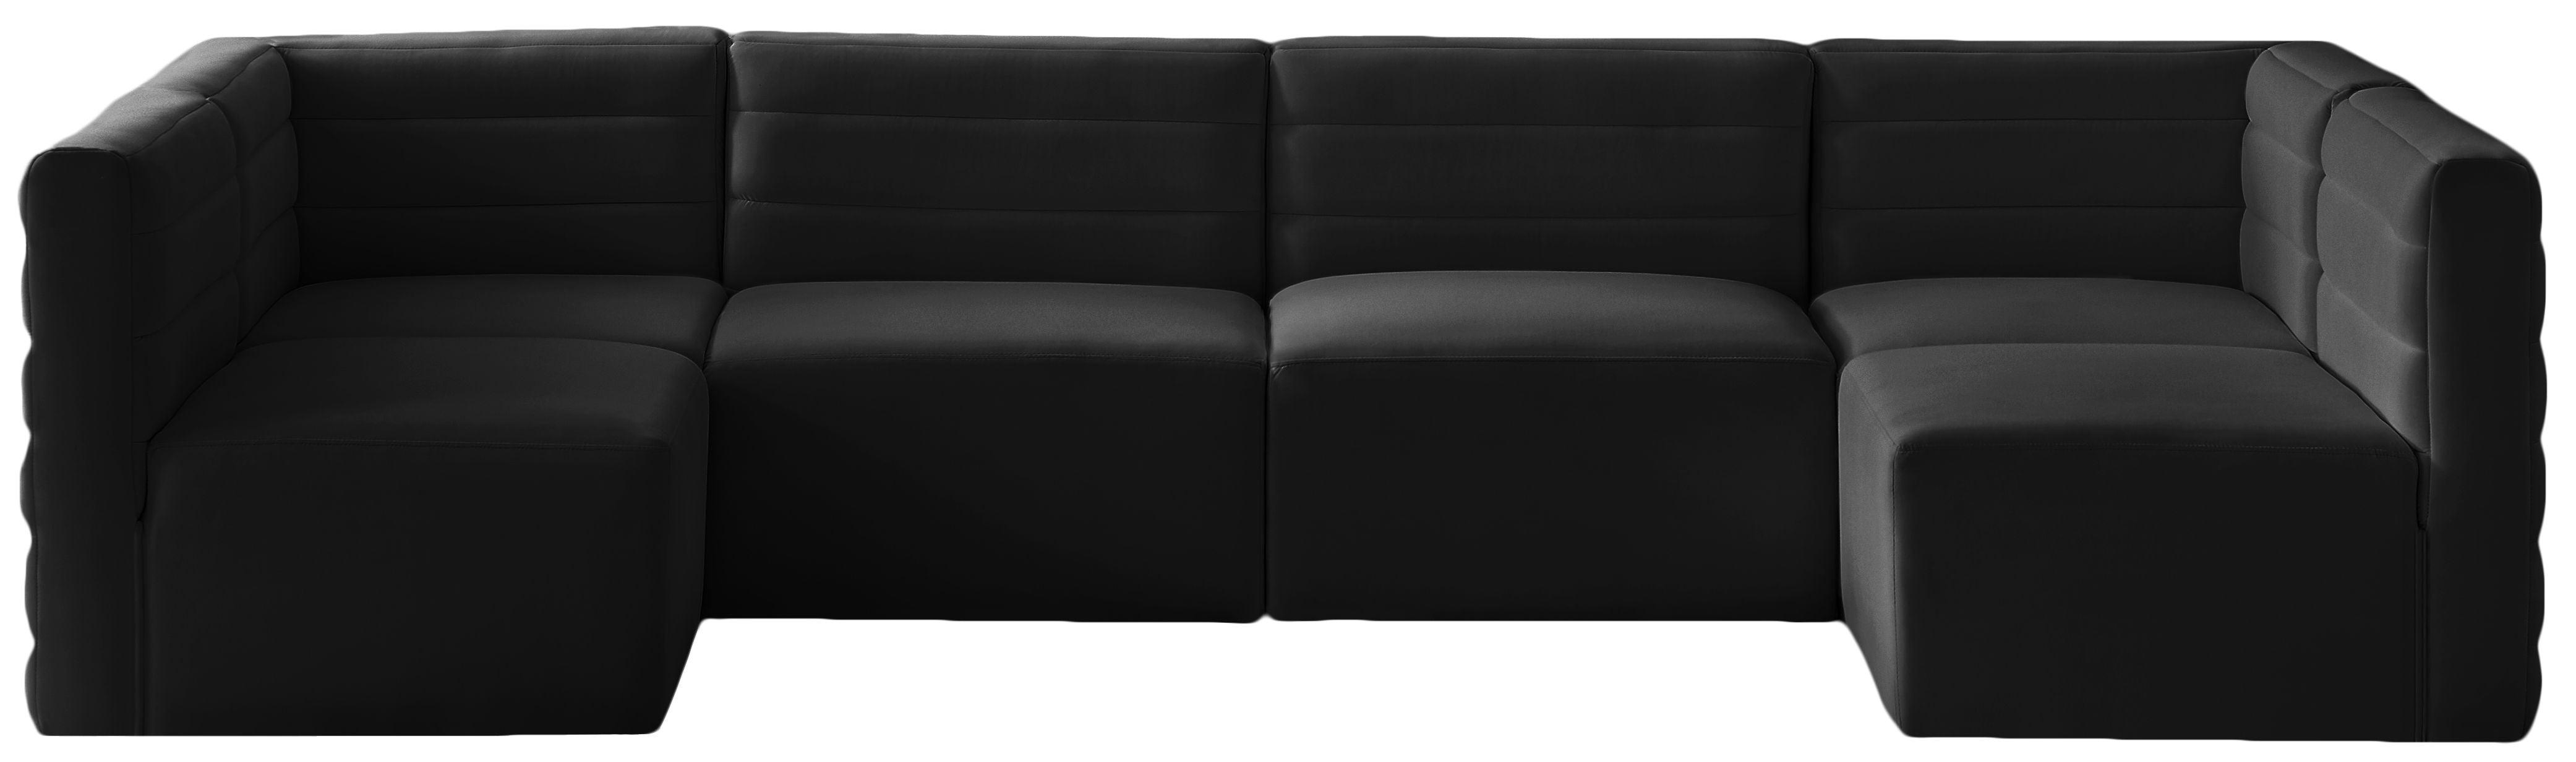 Meridian Furniture - Quincy - Modular Sectional 6 Piece - Black - Fabric - 5th Avenue Furniture